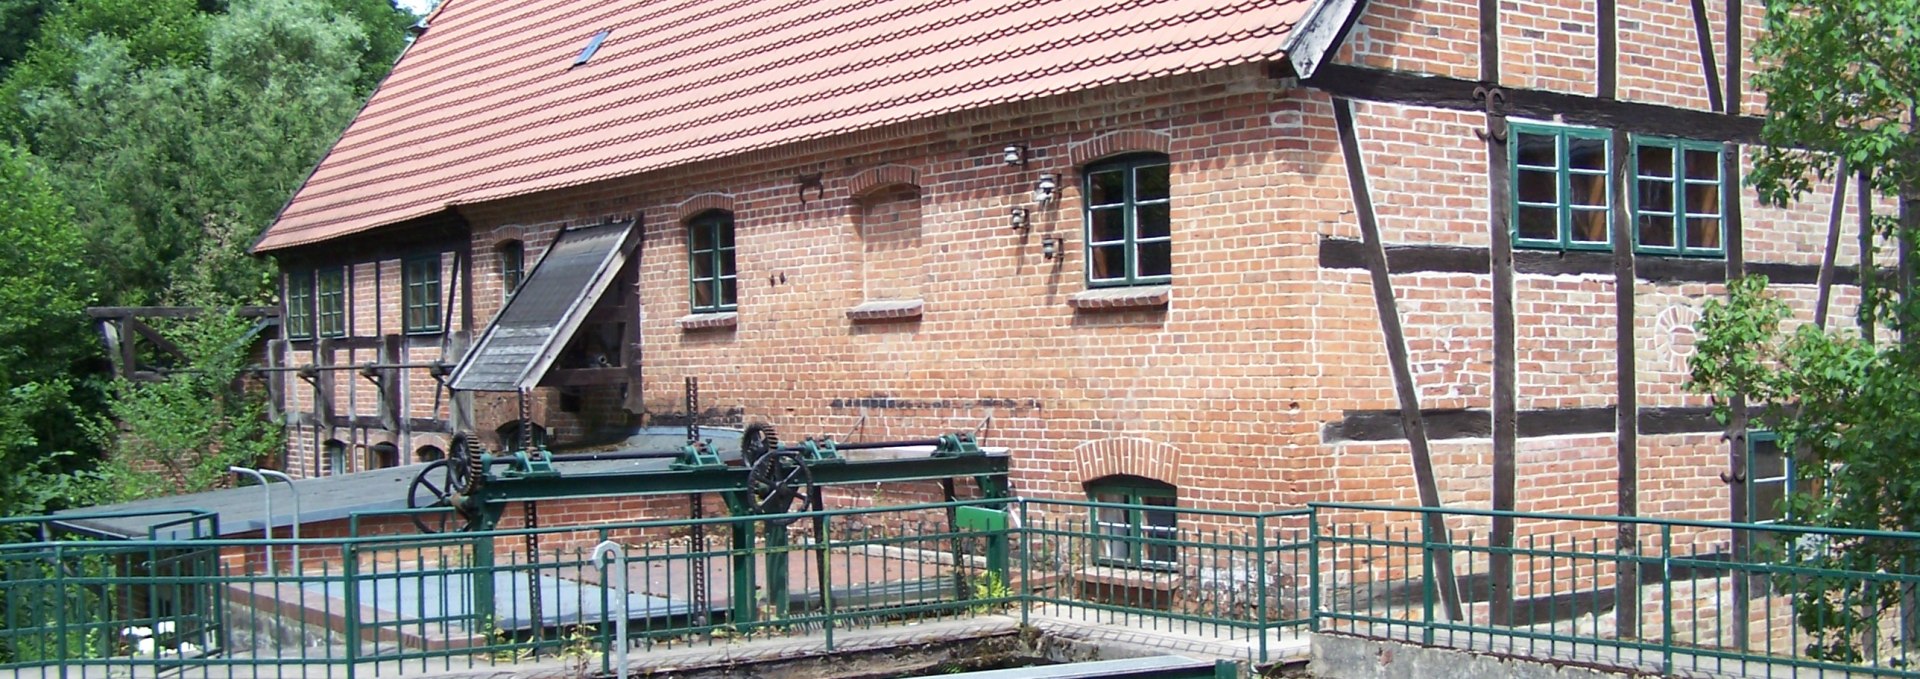 Watermill Kuchelmiß, © Touristinformation Krakow am See